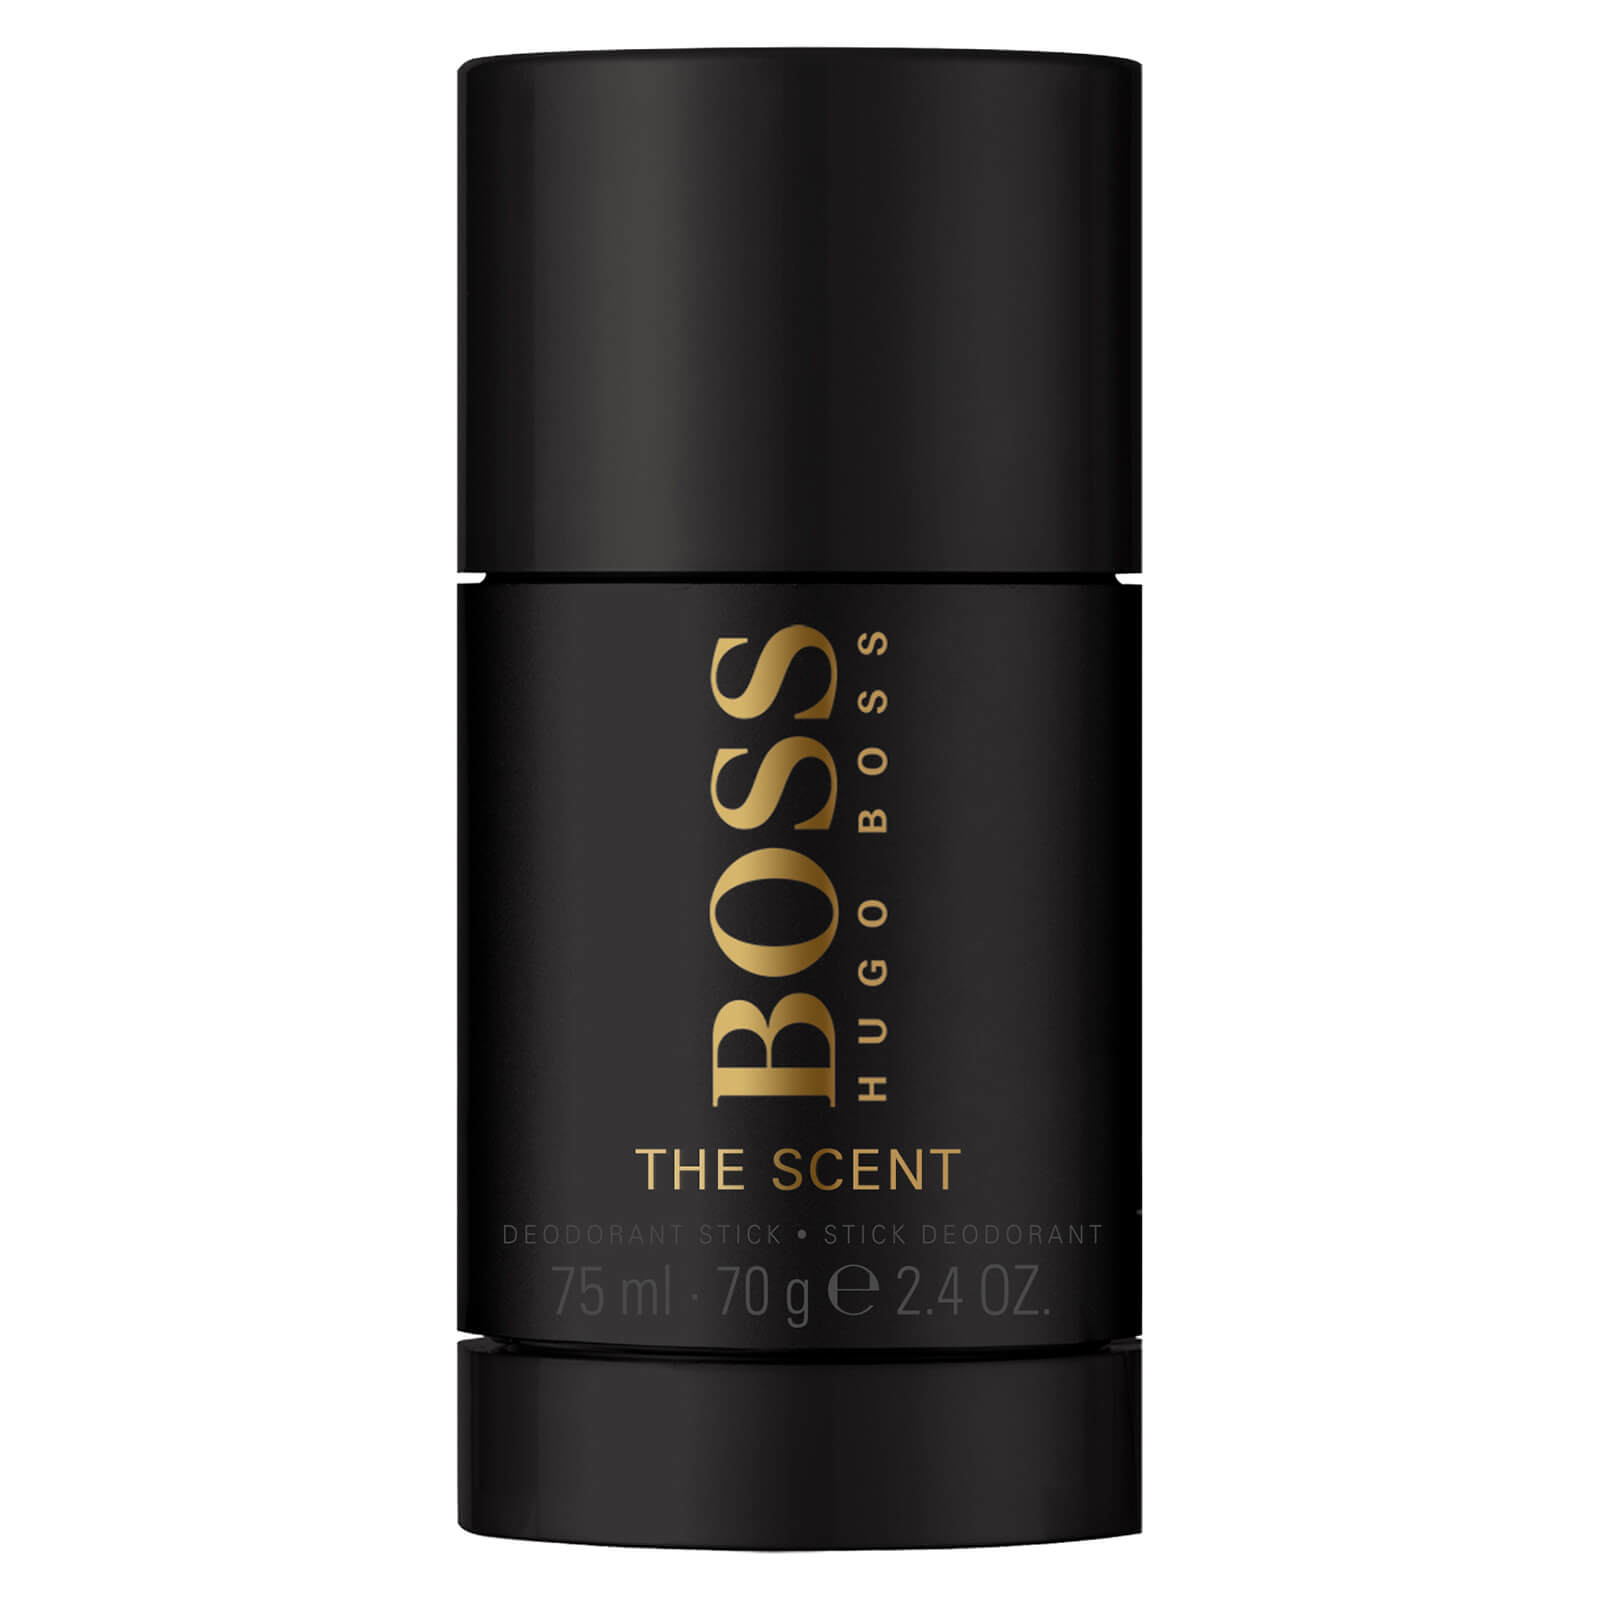 Hugo Boss The Scent Deodorant Stick 